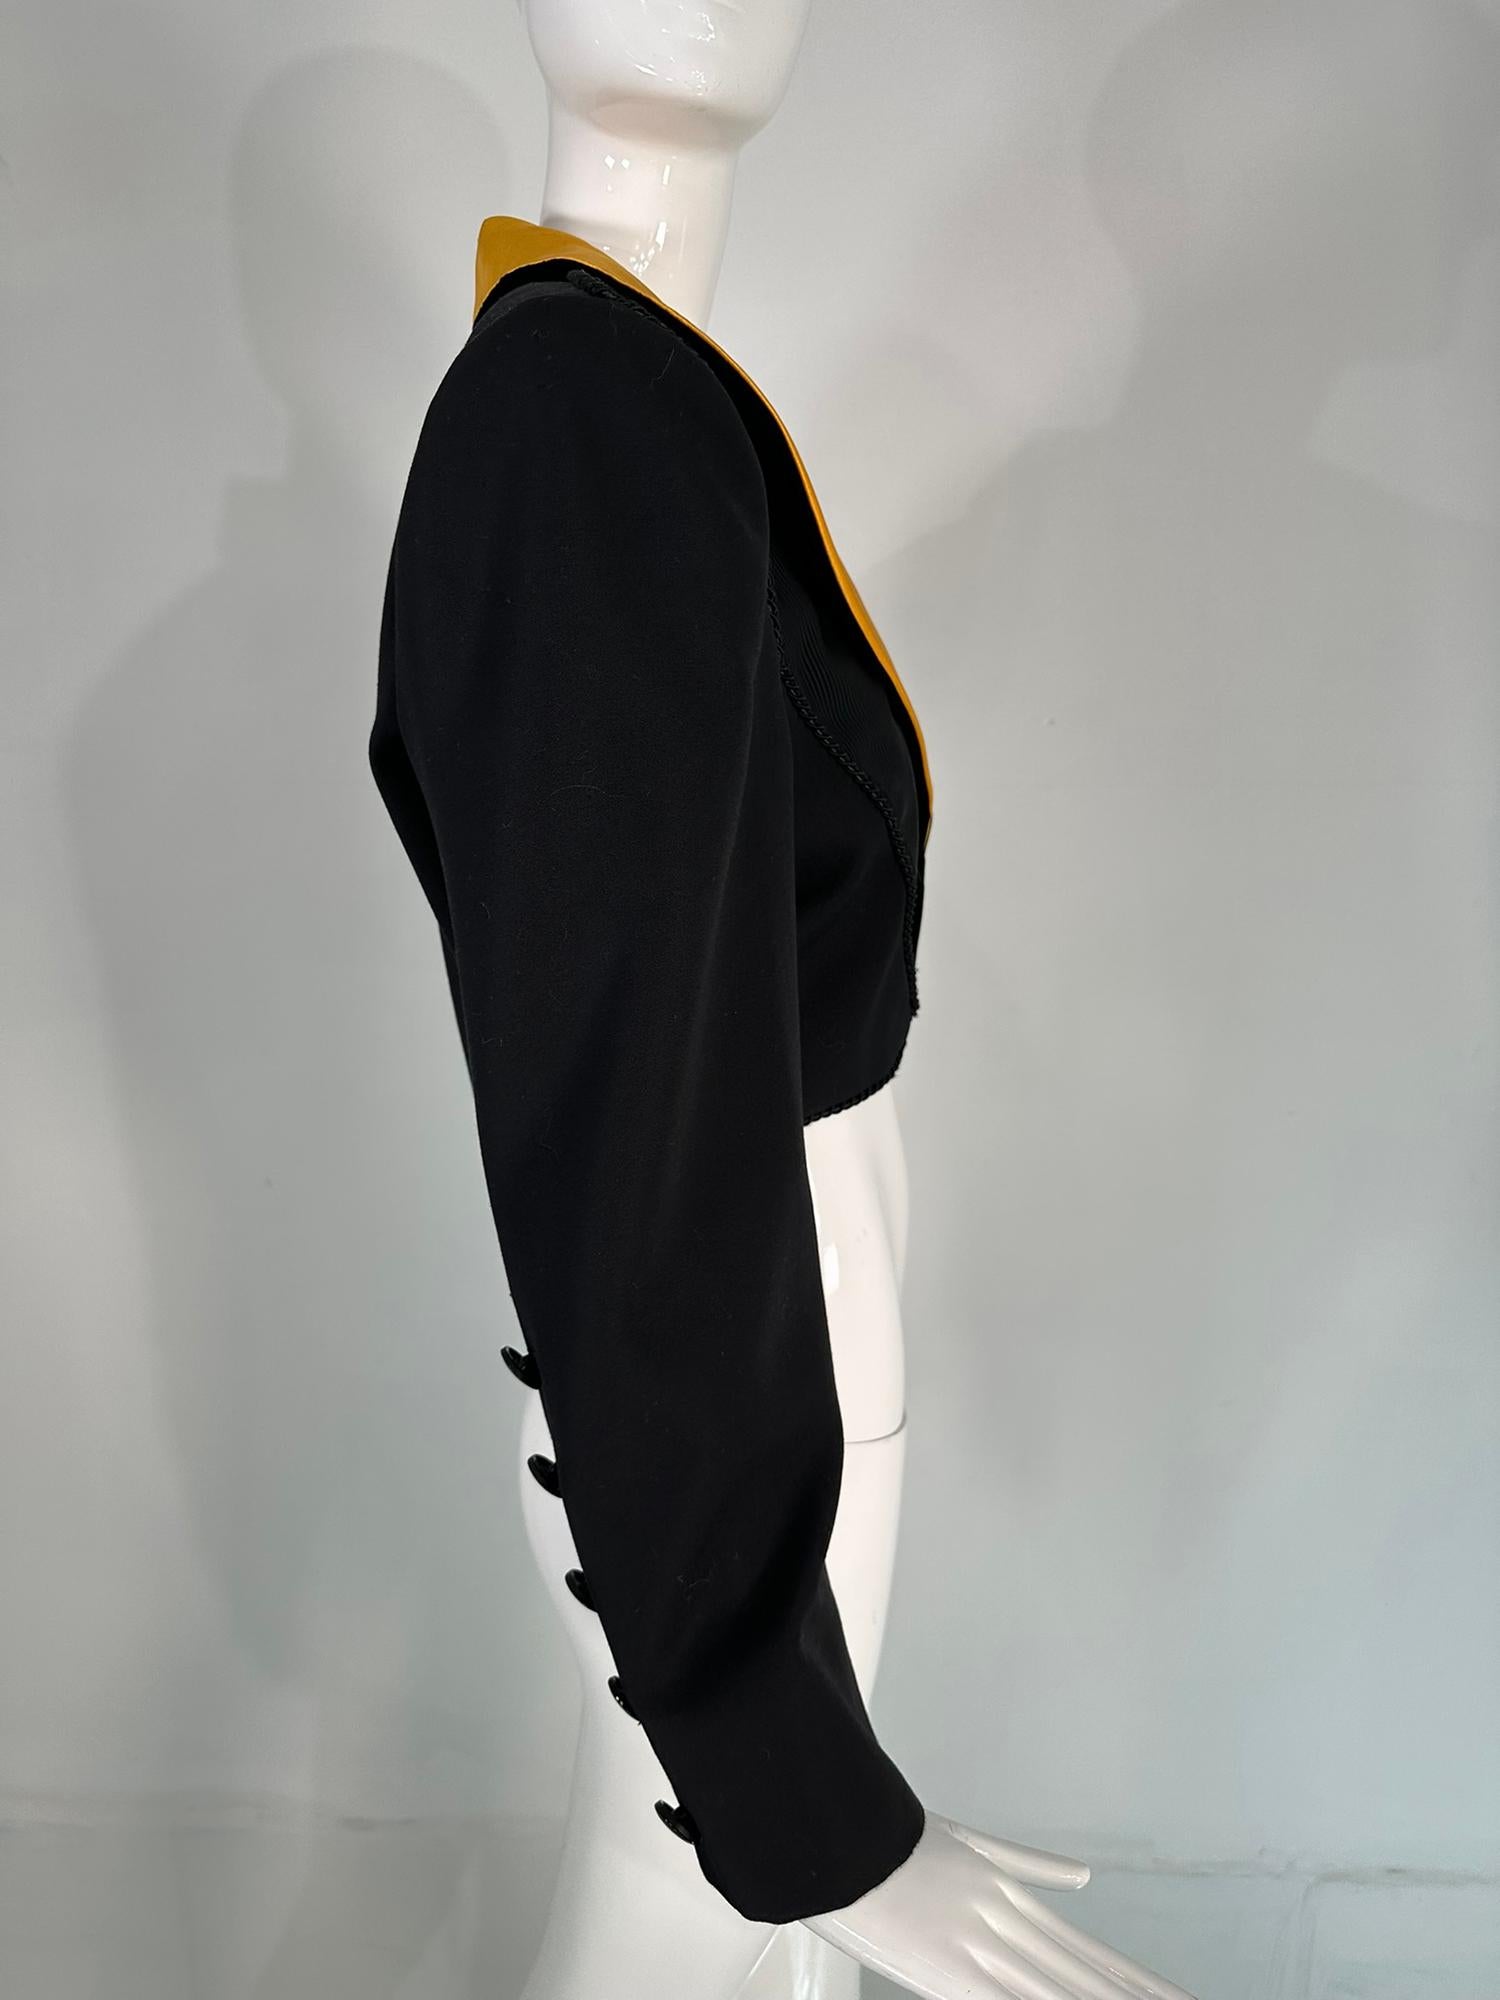 Yves Saint Laurent Rive Gauche Black Sequin Yellow Satin Cropped Jacket 1990s For Sale 9